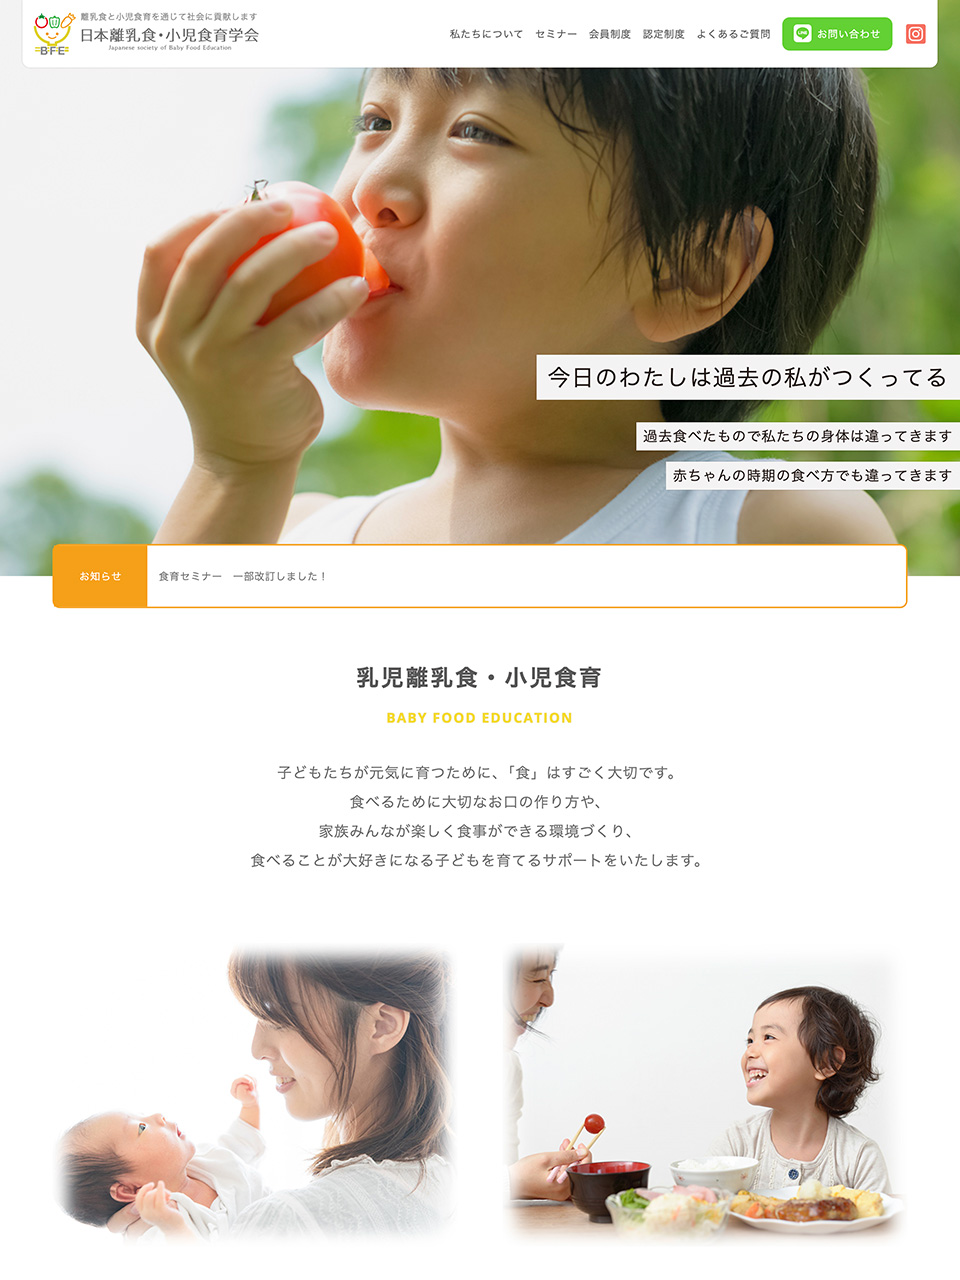 Japanese Society of Baby Food Education